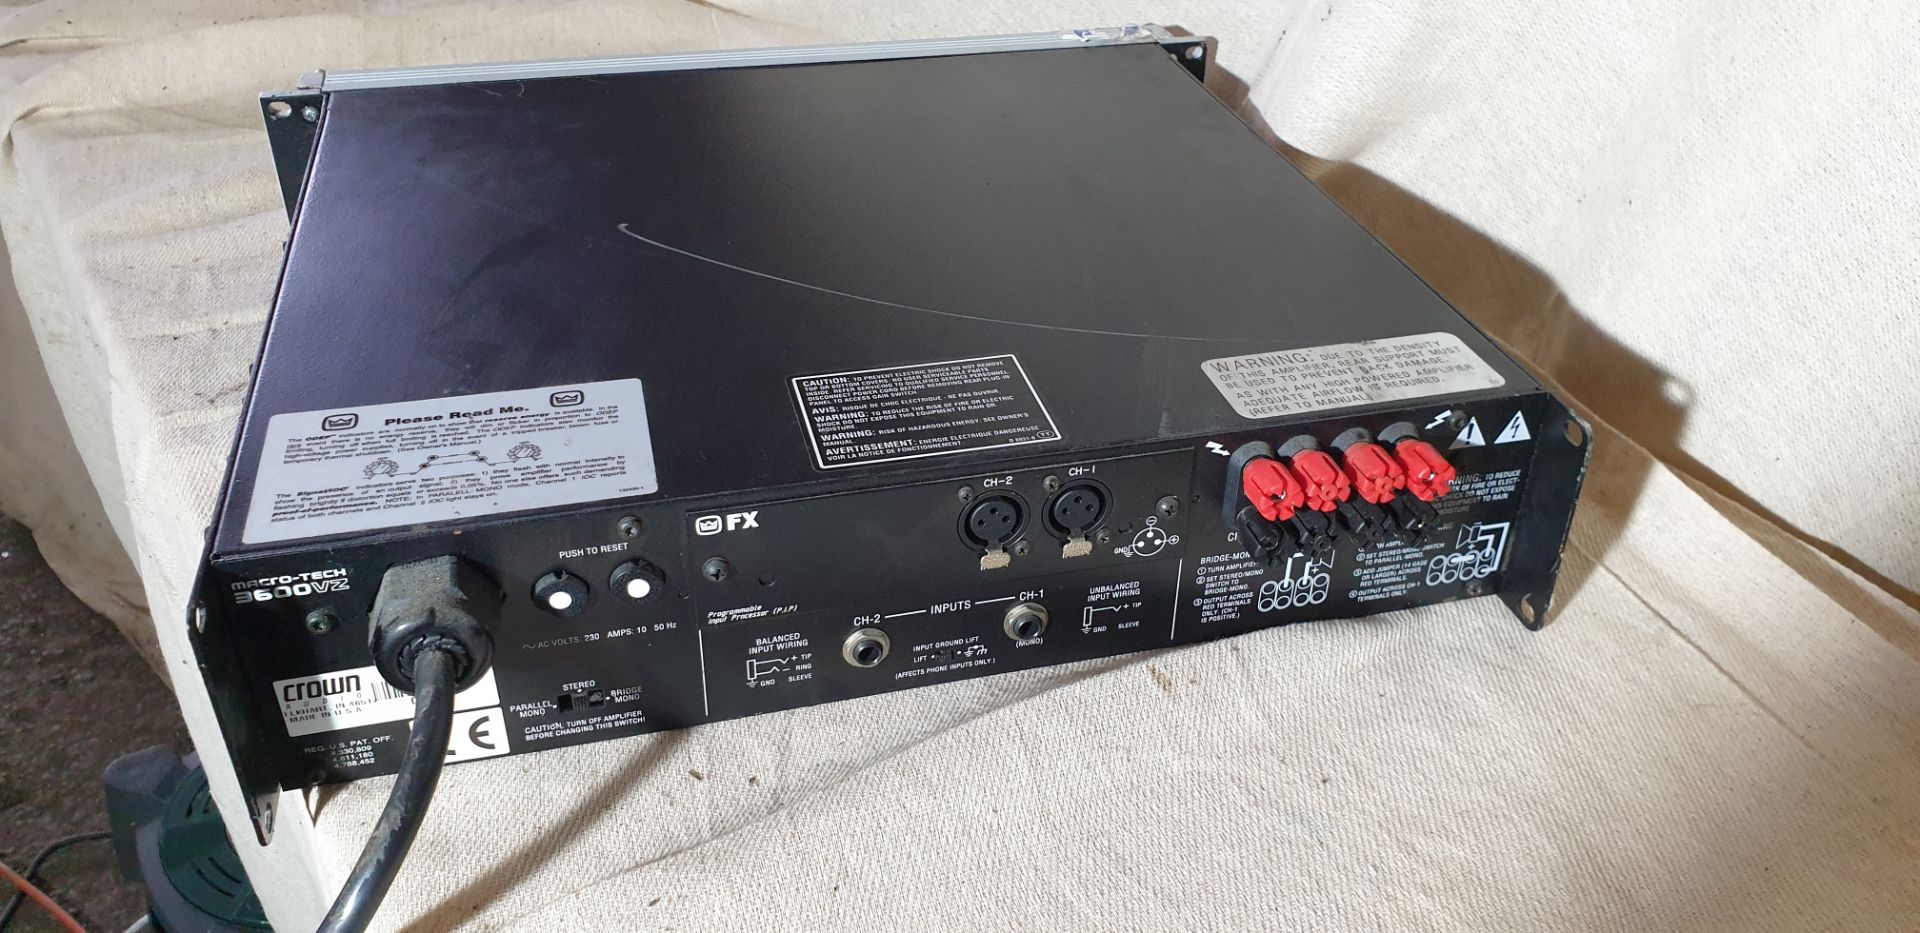 1 ; Crown Macro-Tech 3600 VZ Power Amplifier - Image 3 of 3